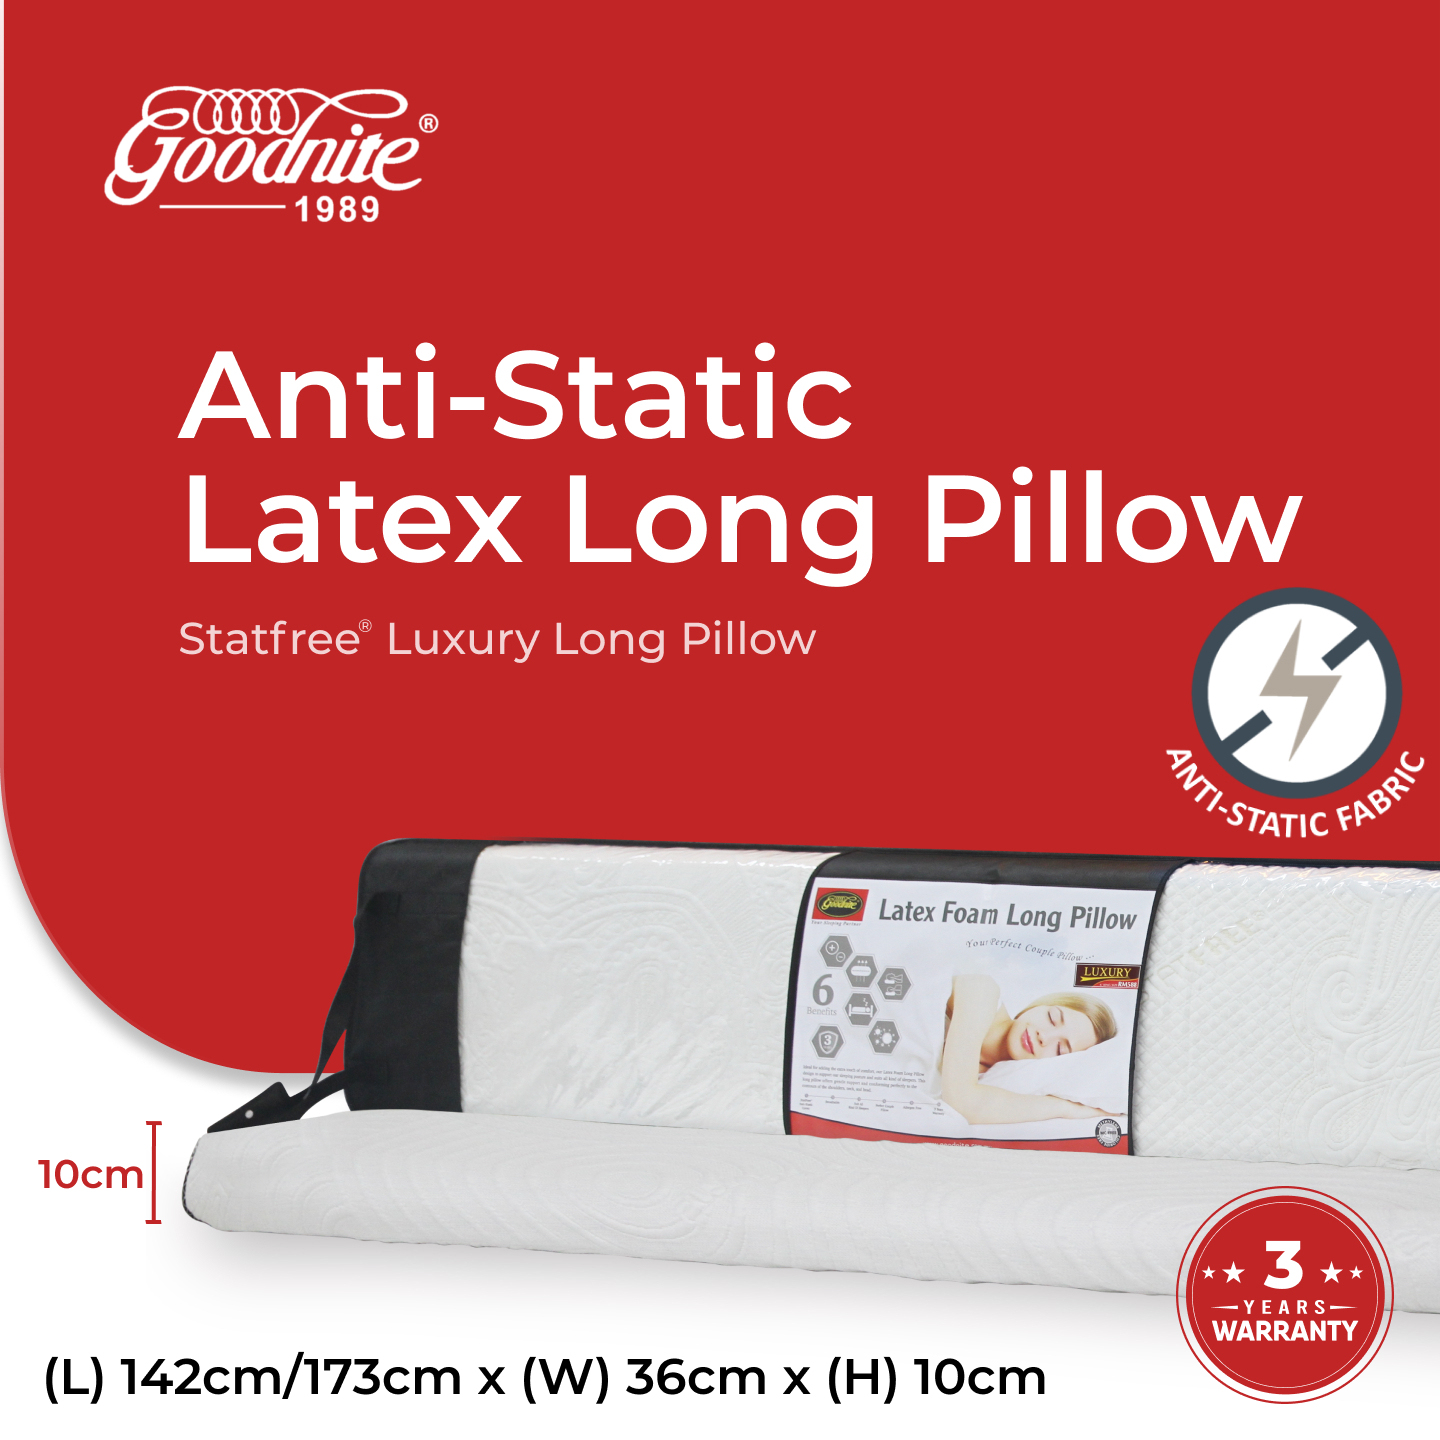 Statfree Luxury Long Pillow M.jpg